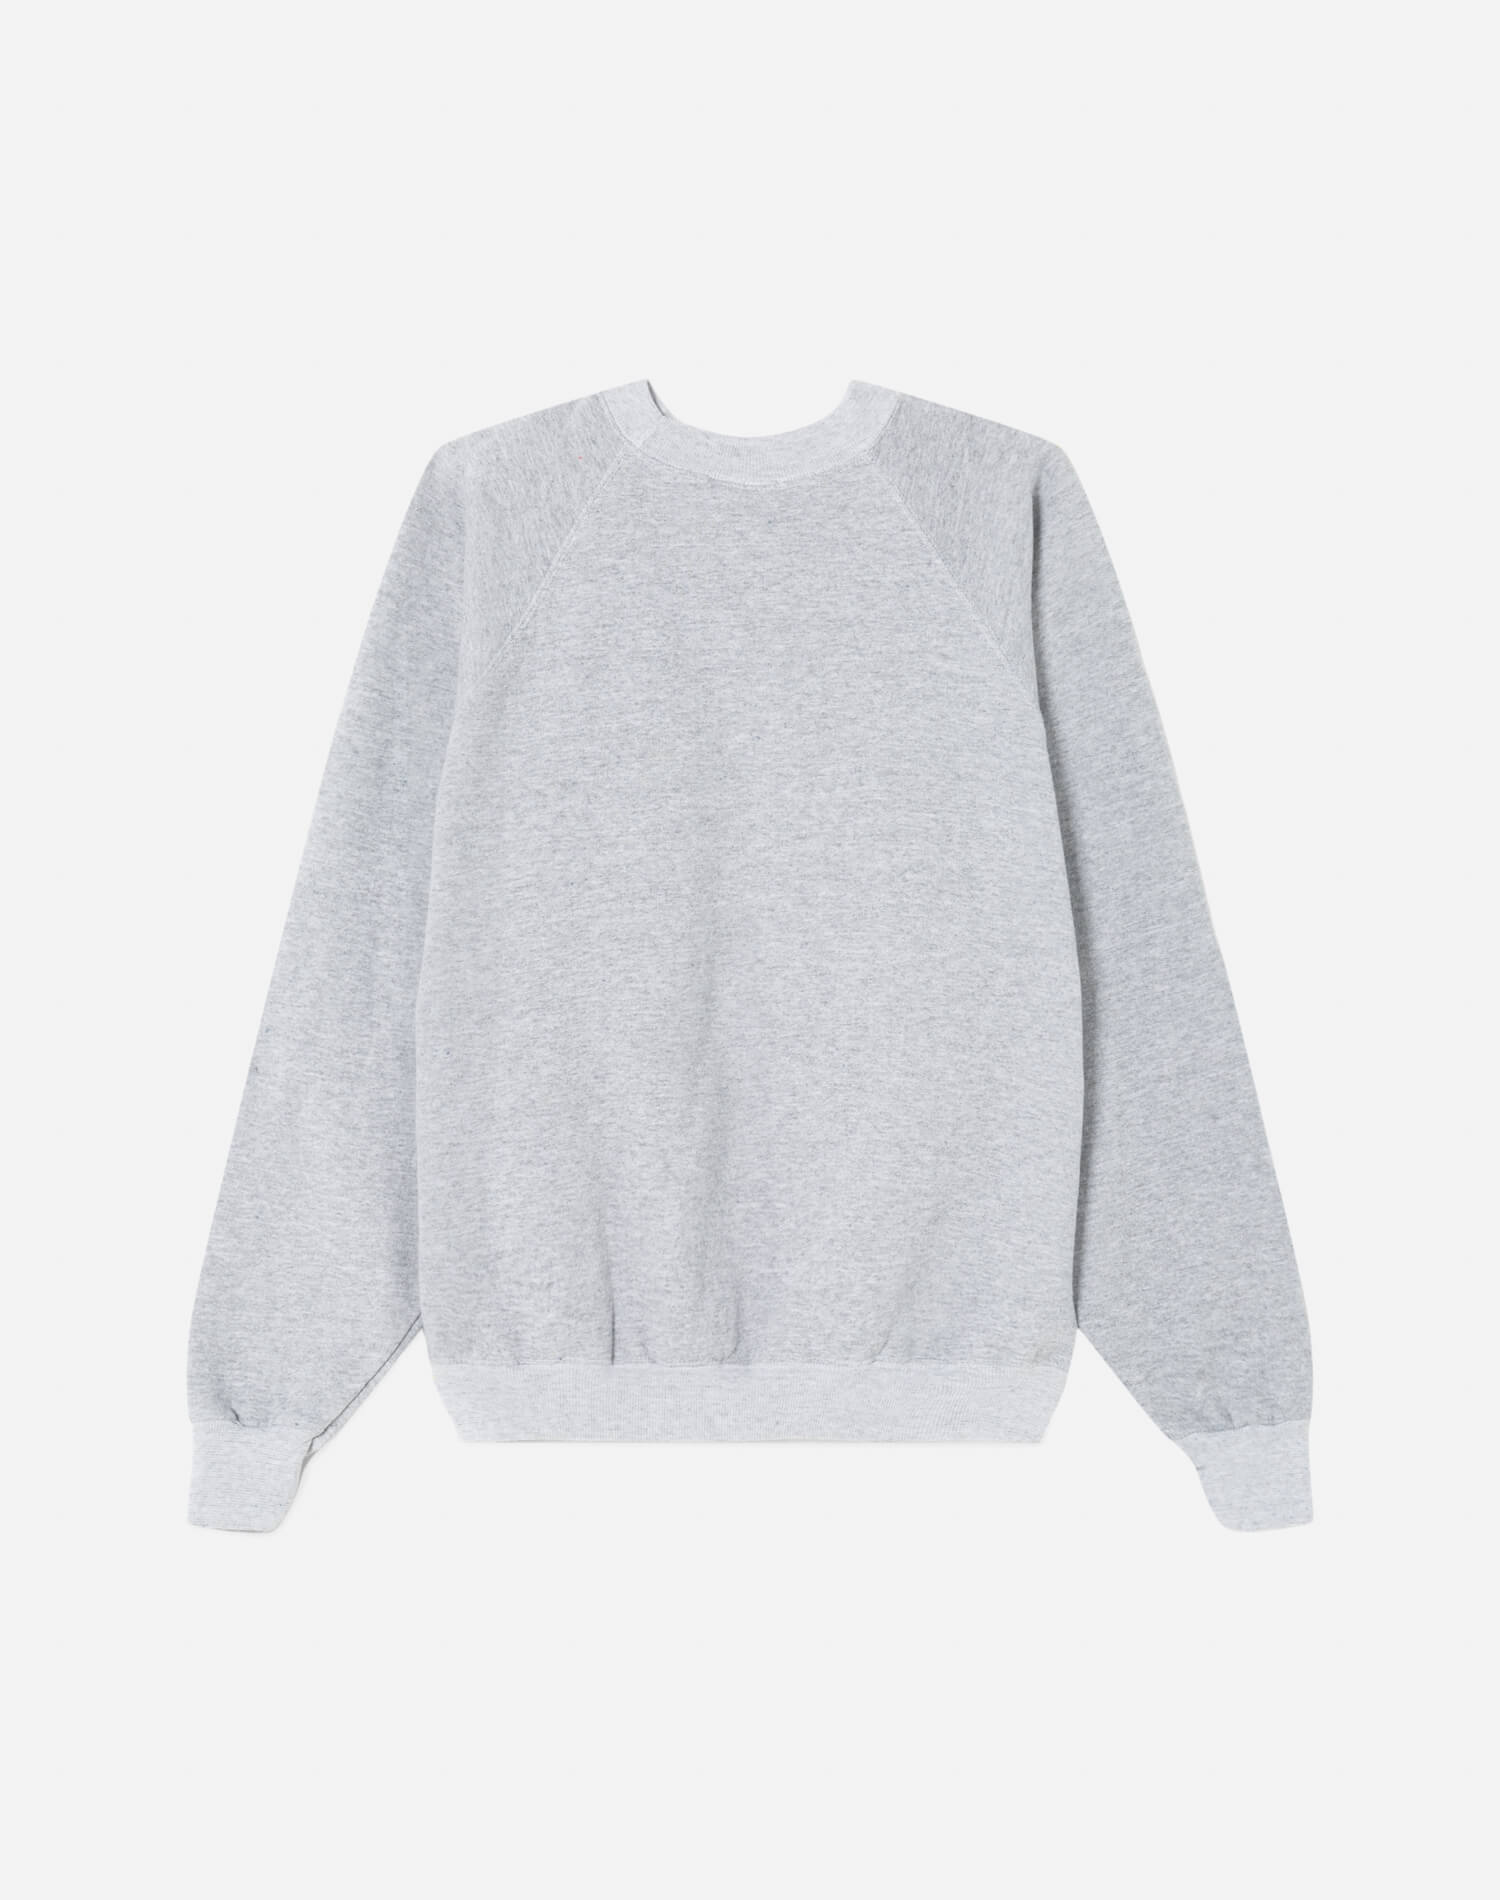 Upcycled "LAX" Sweatshirt - Grey